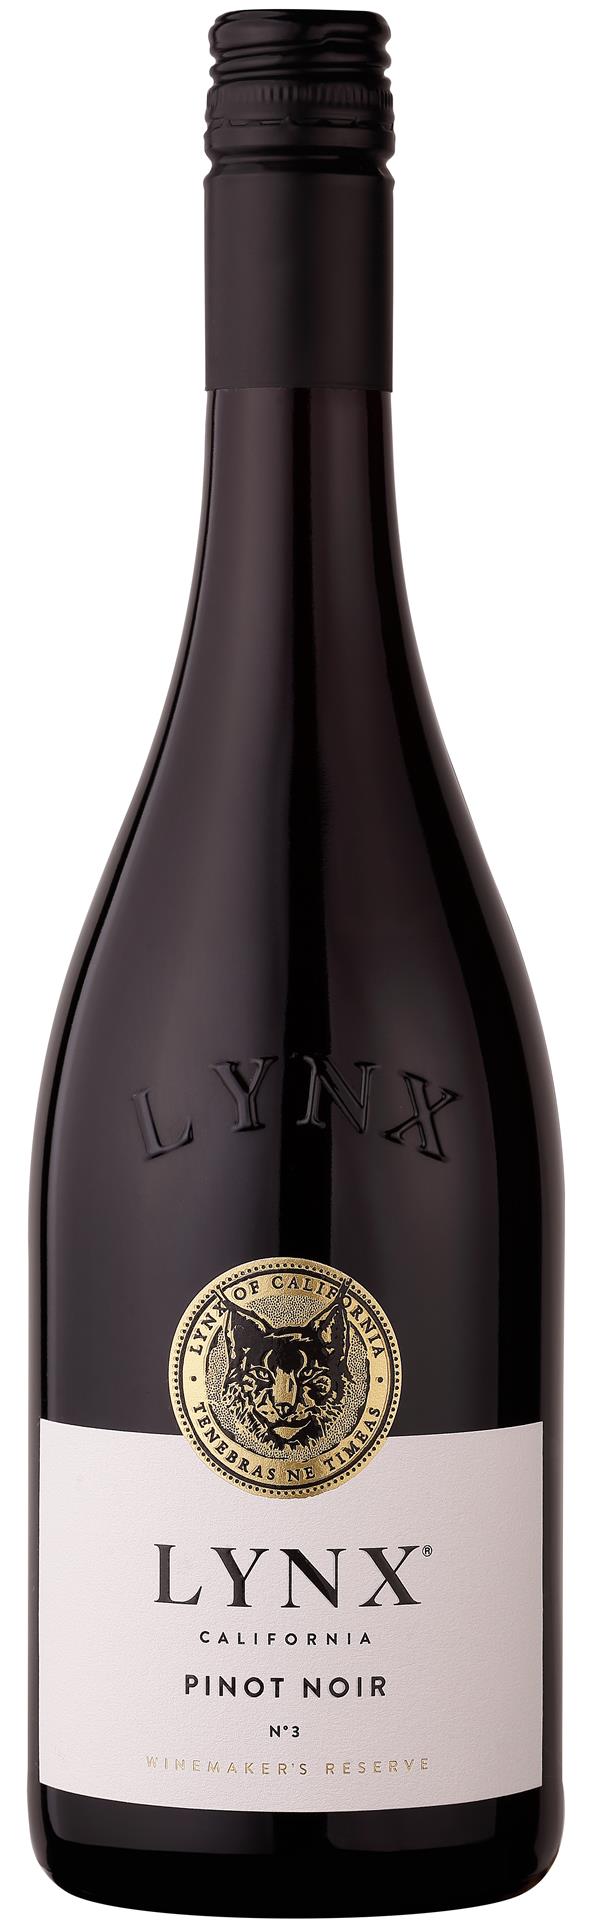 Lynx Pinot Noir California 2020